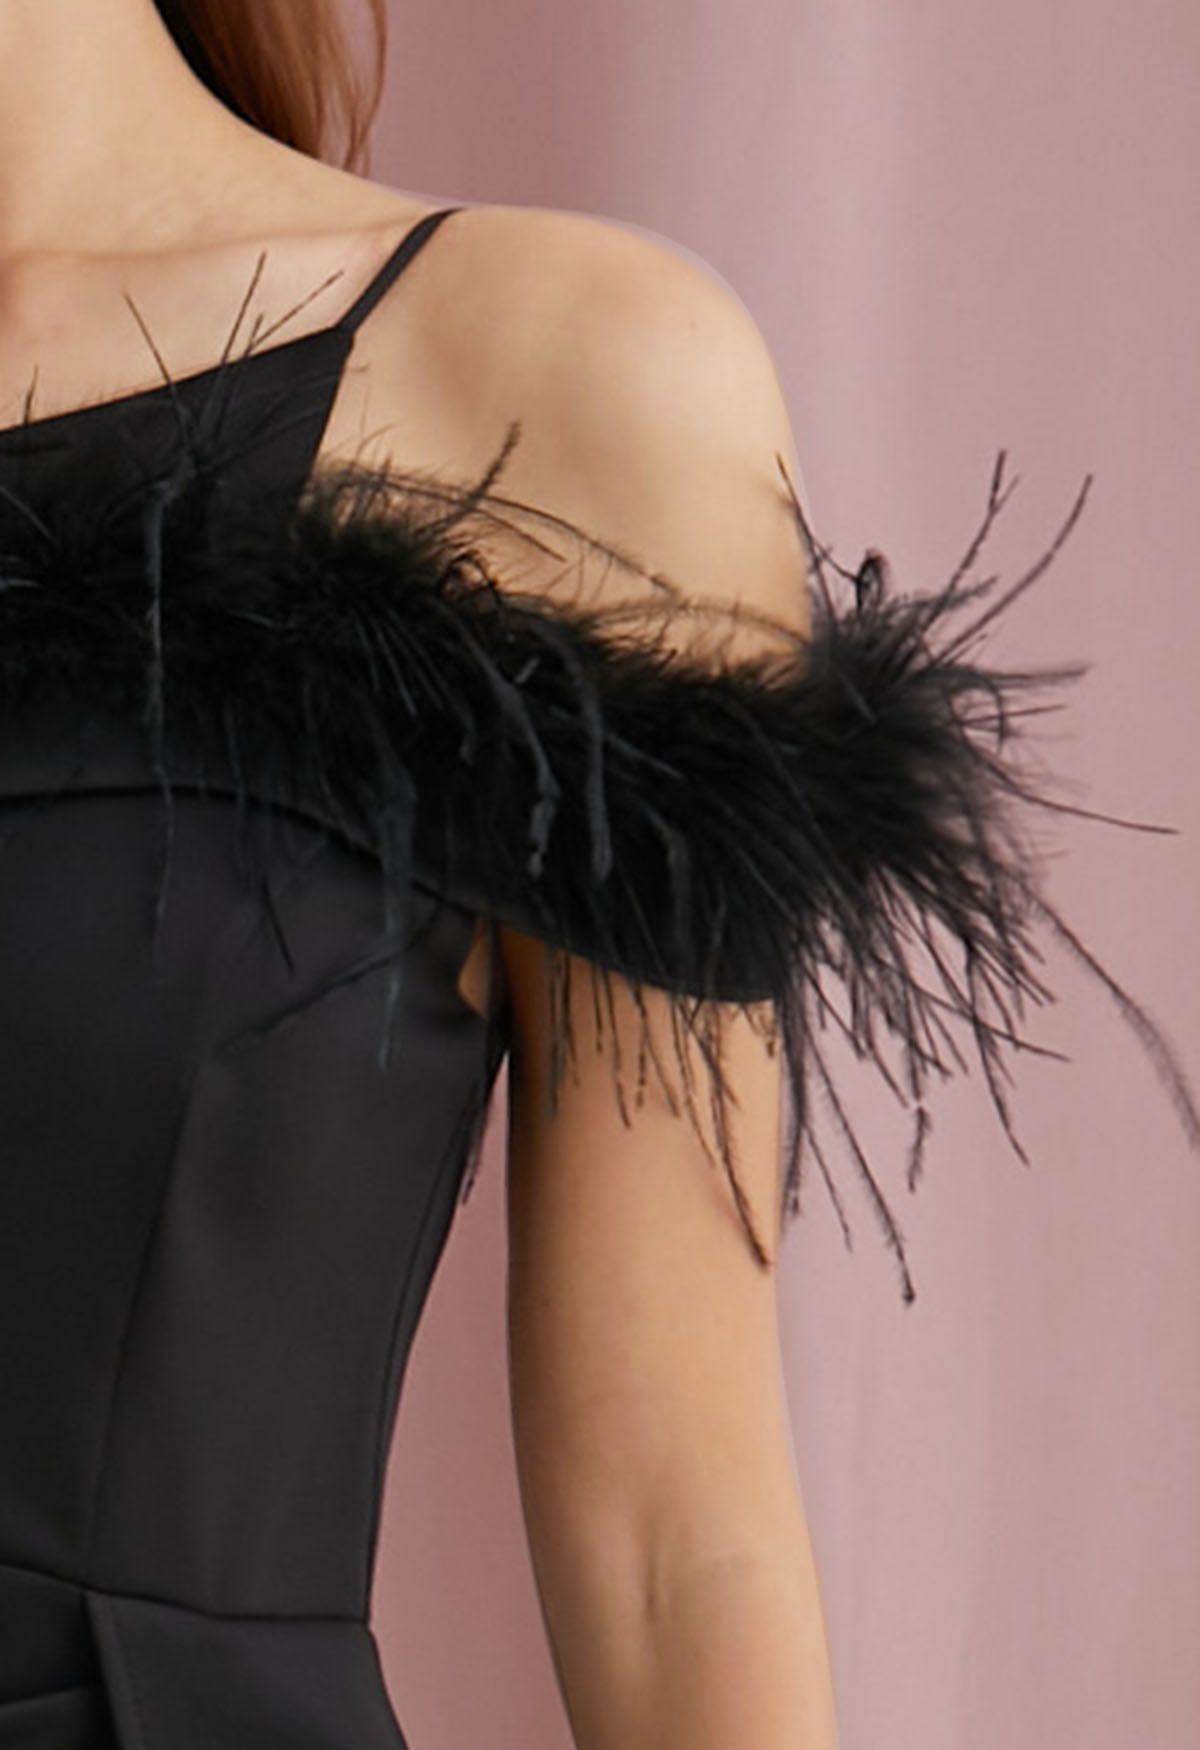 Feather Trim One-Shoulder Slit Mermaid Gown in Black